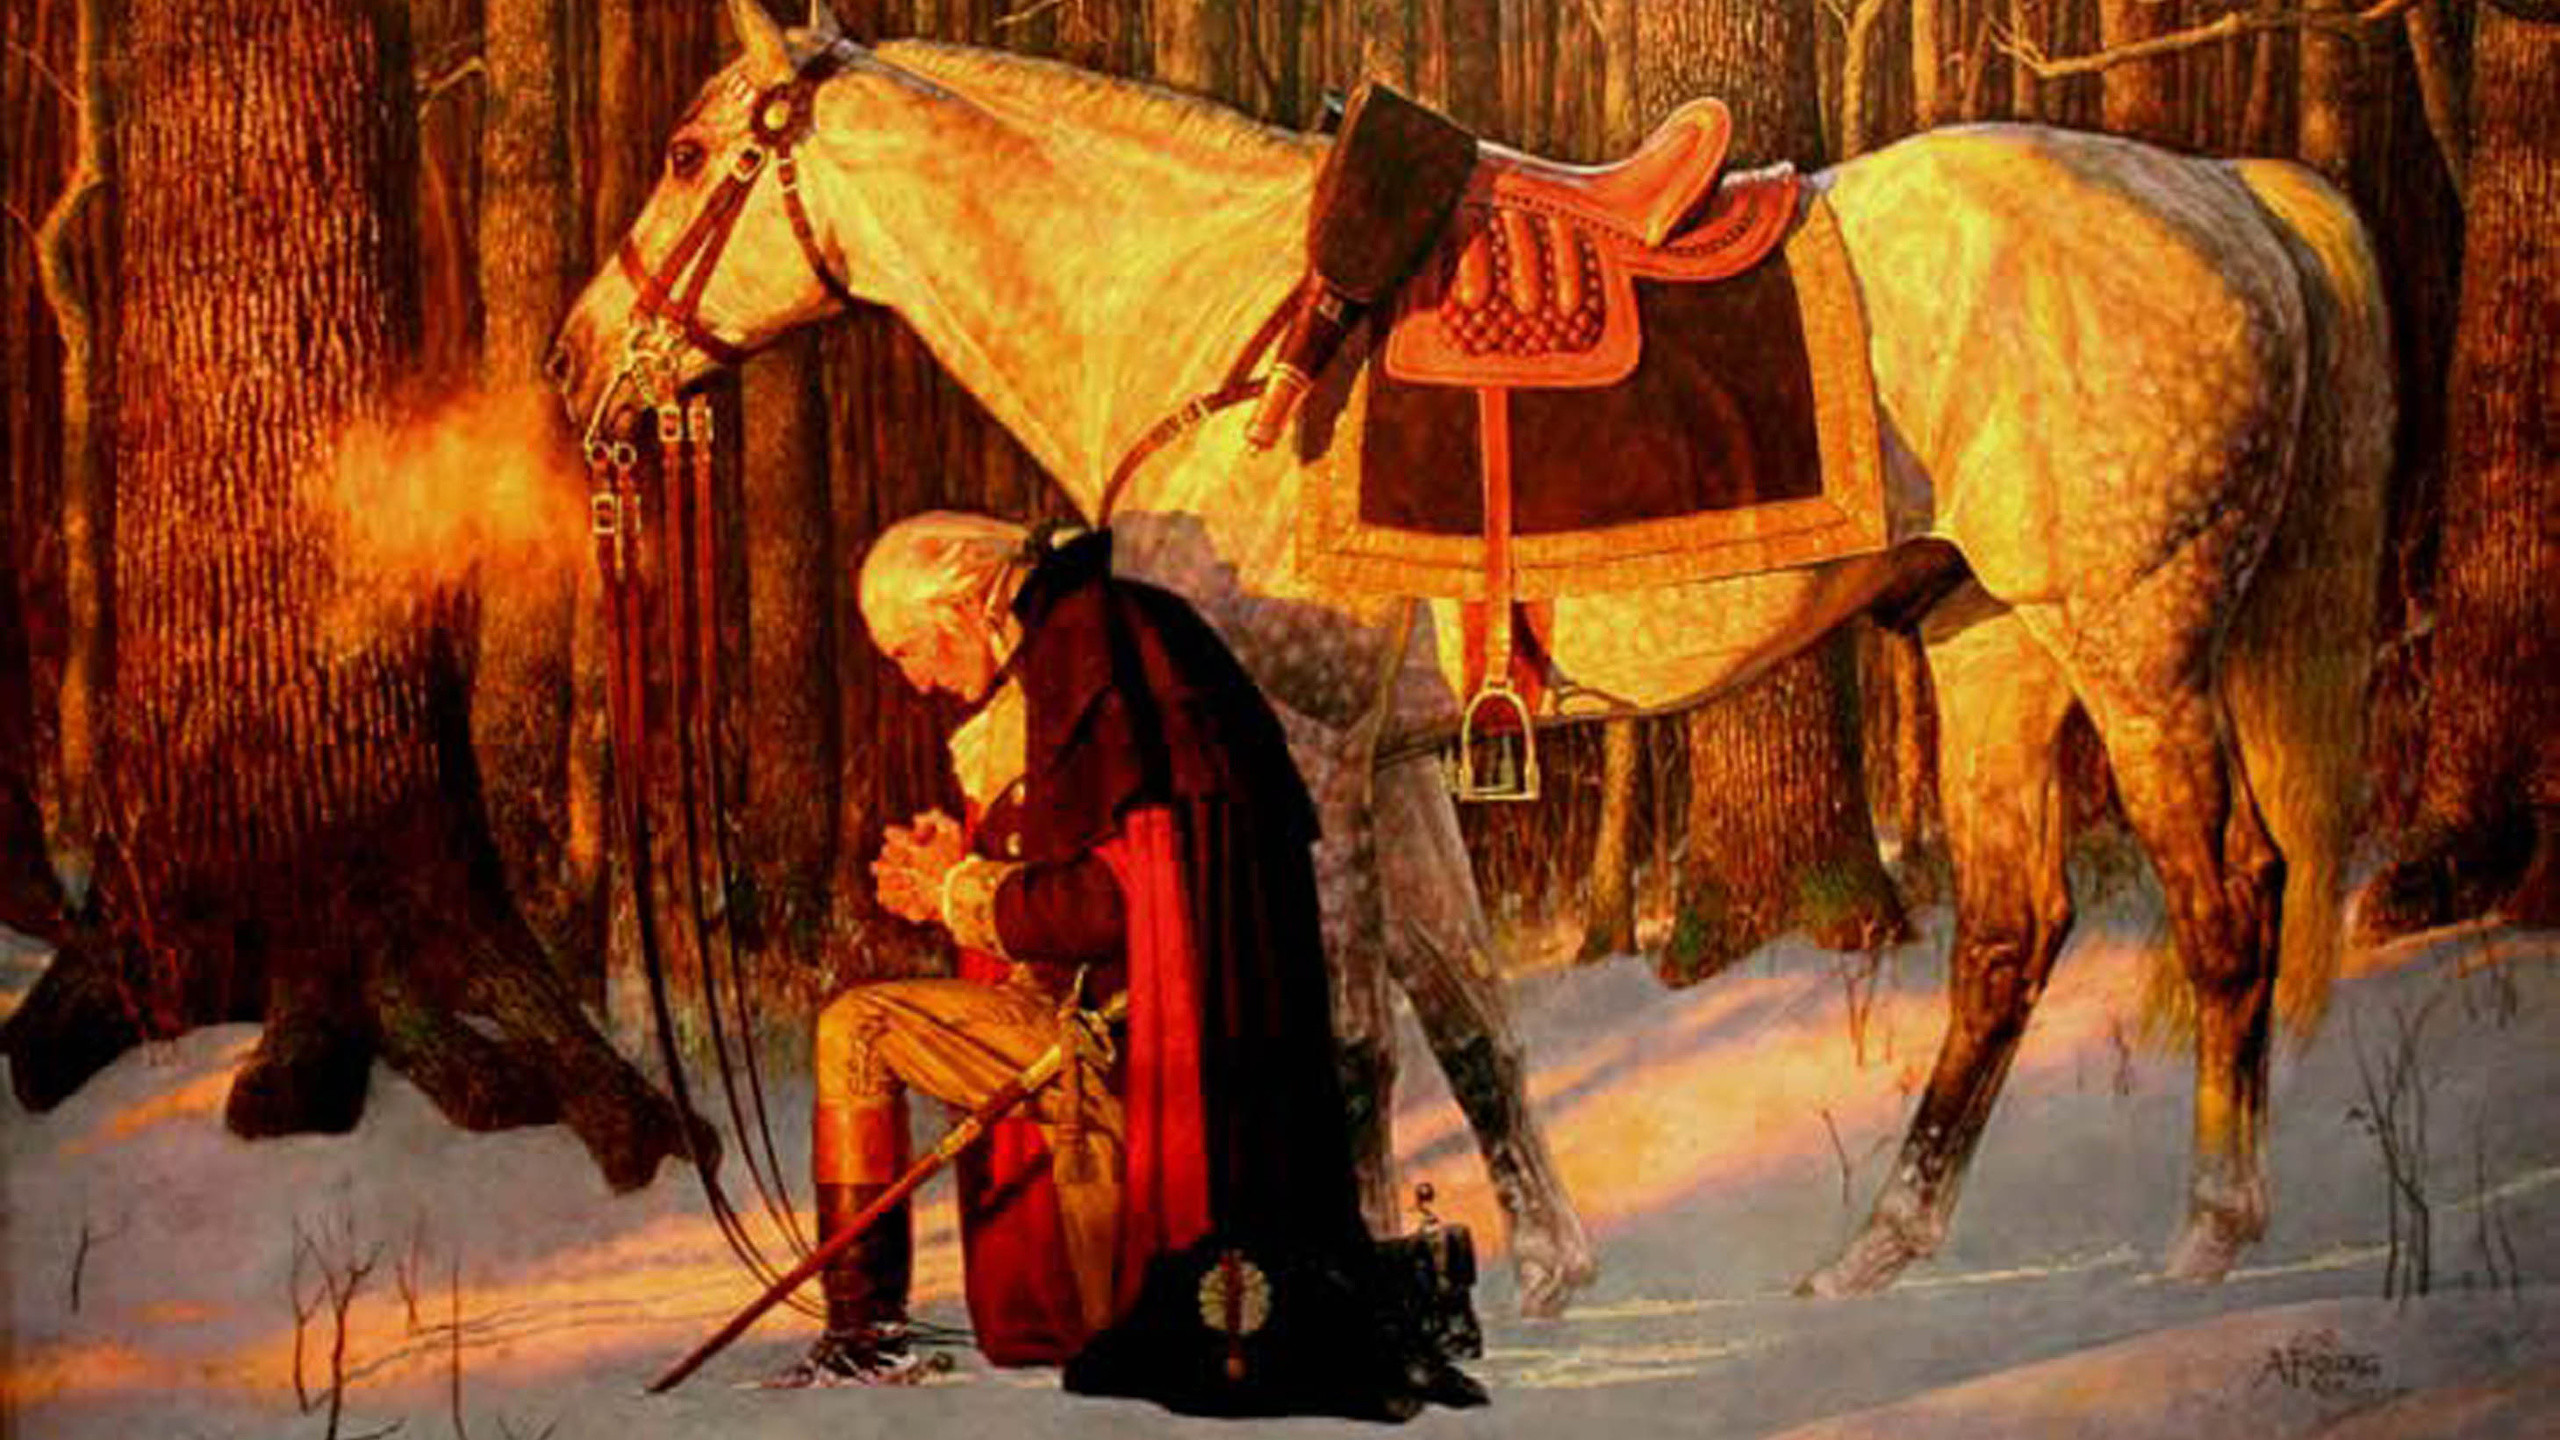 2560x1440 ... George Washington Praying, President George Washington, Usa President,  The First Us President George Washington, Politician, The Founding Father  Of The ...